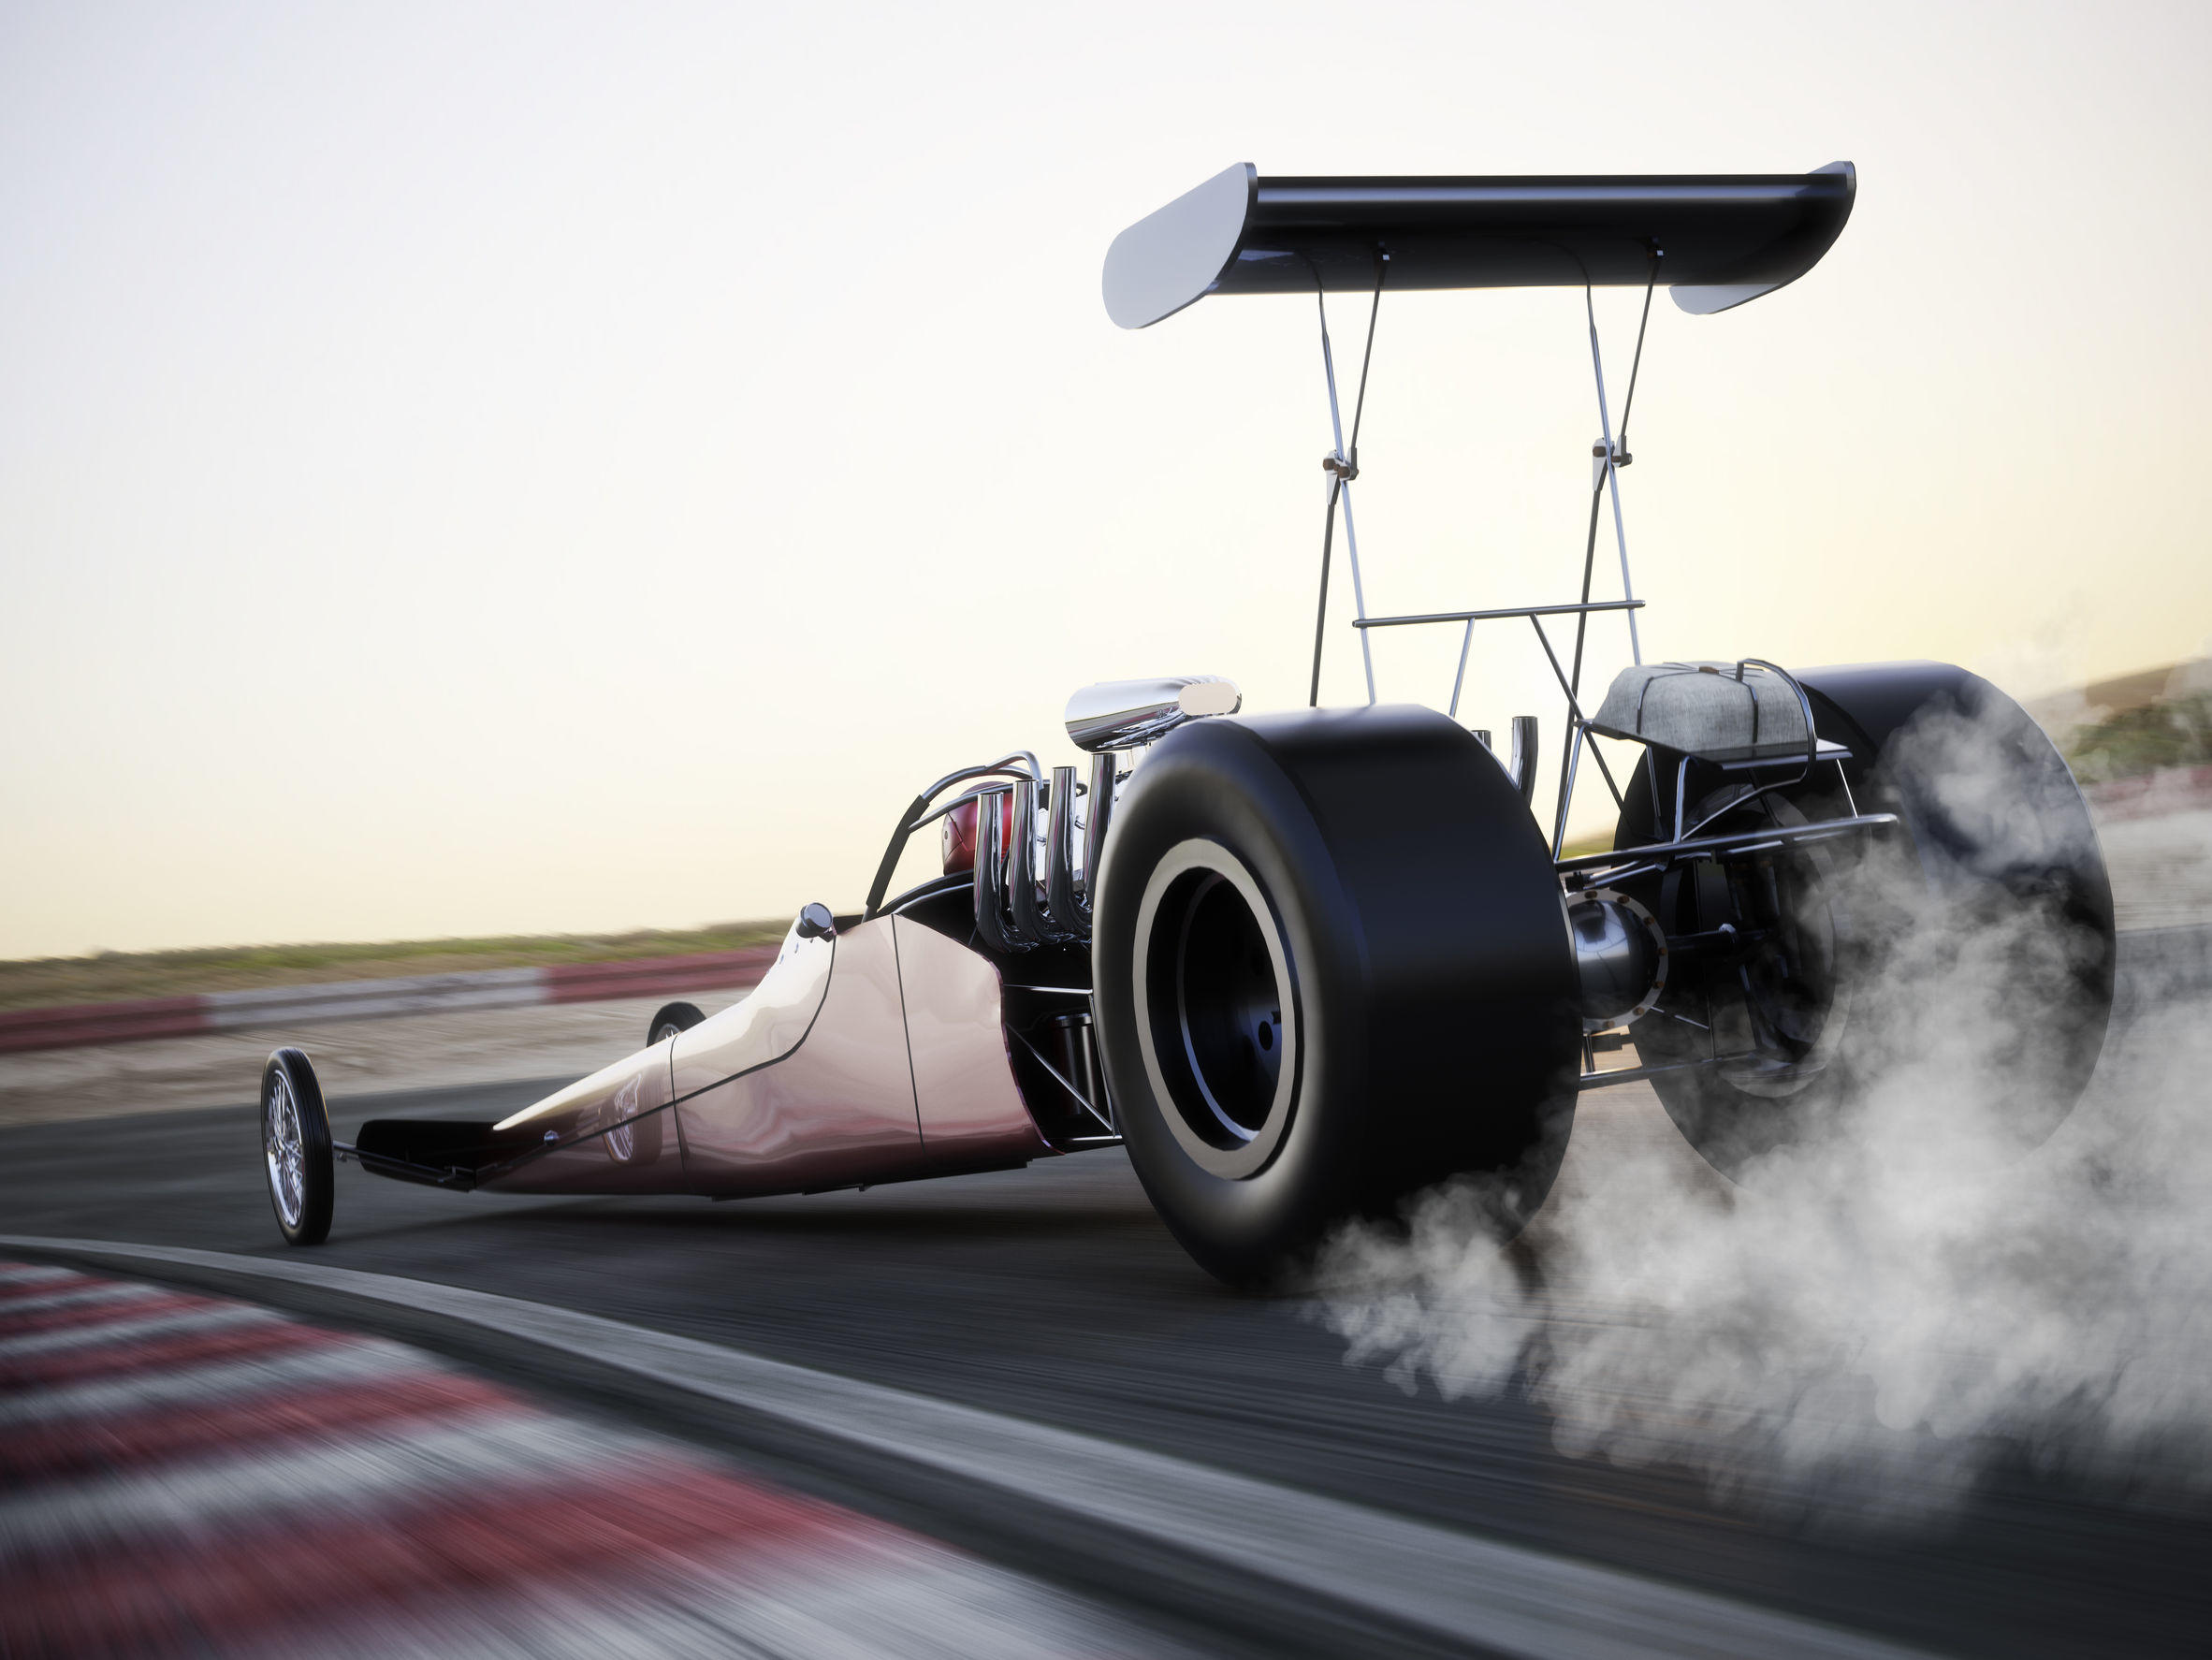 Futuristic drag racing car